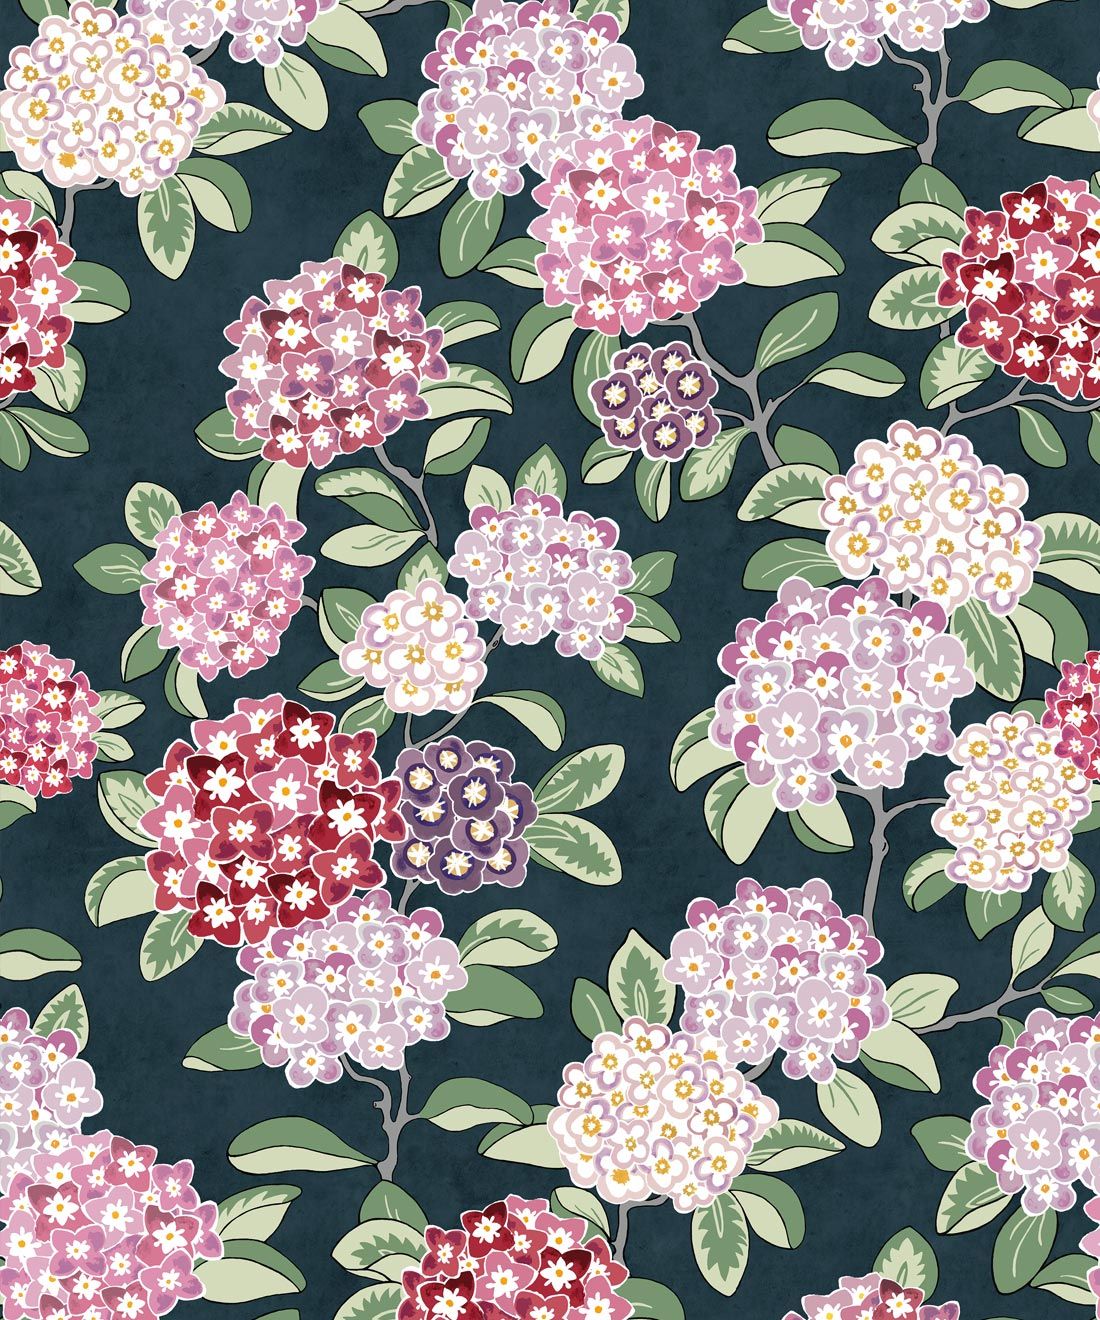 Euphemia 1 Wallpaper, floral bohemian style wallpaper • Milton & King